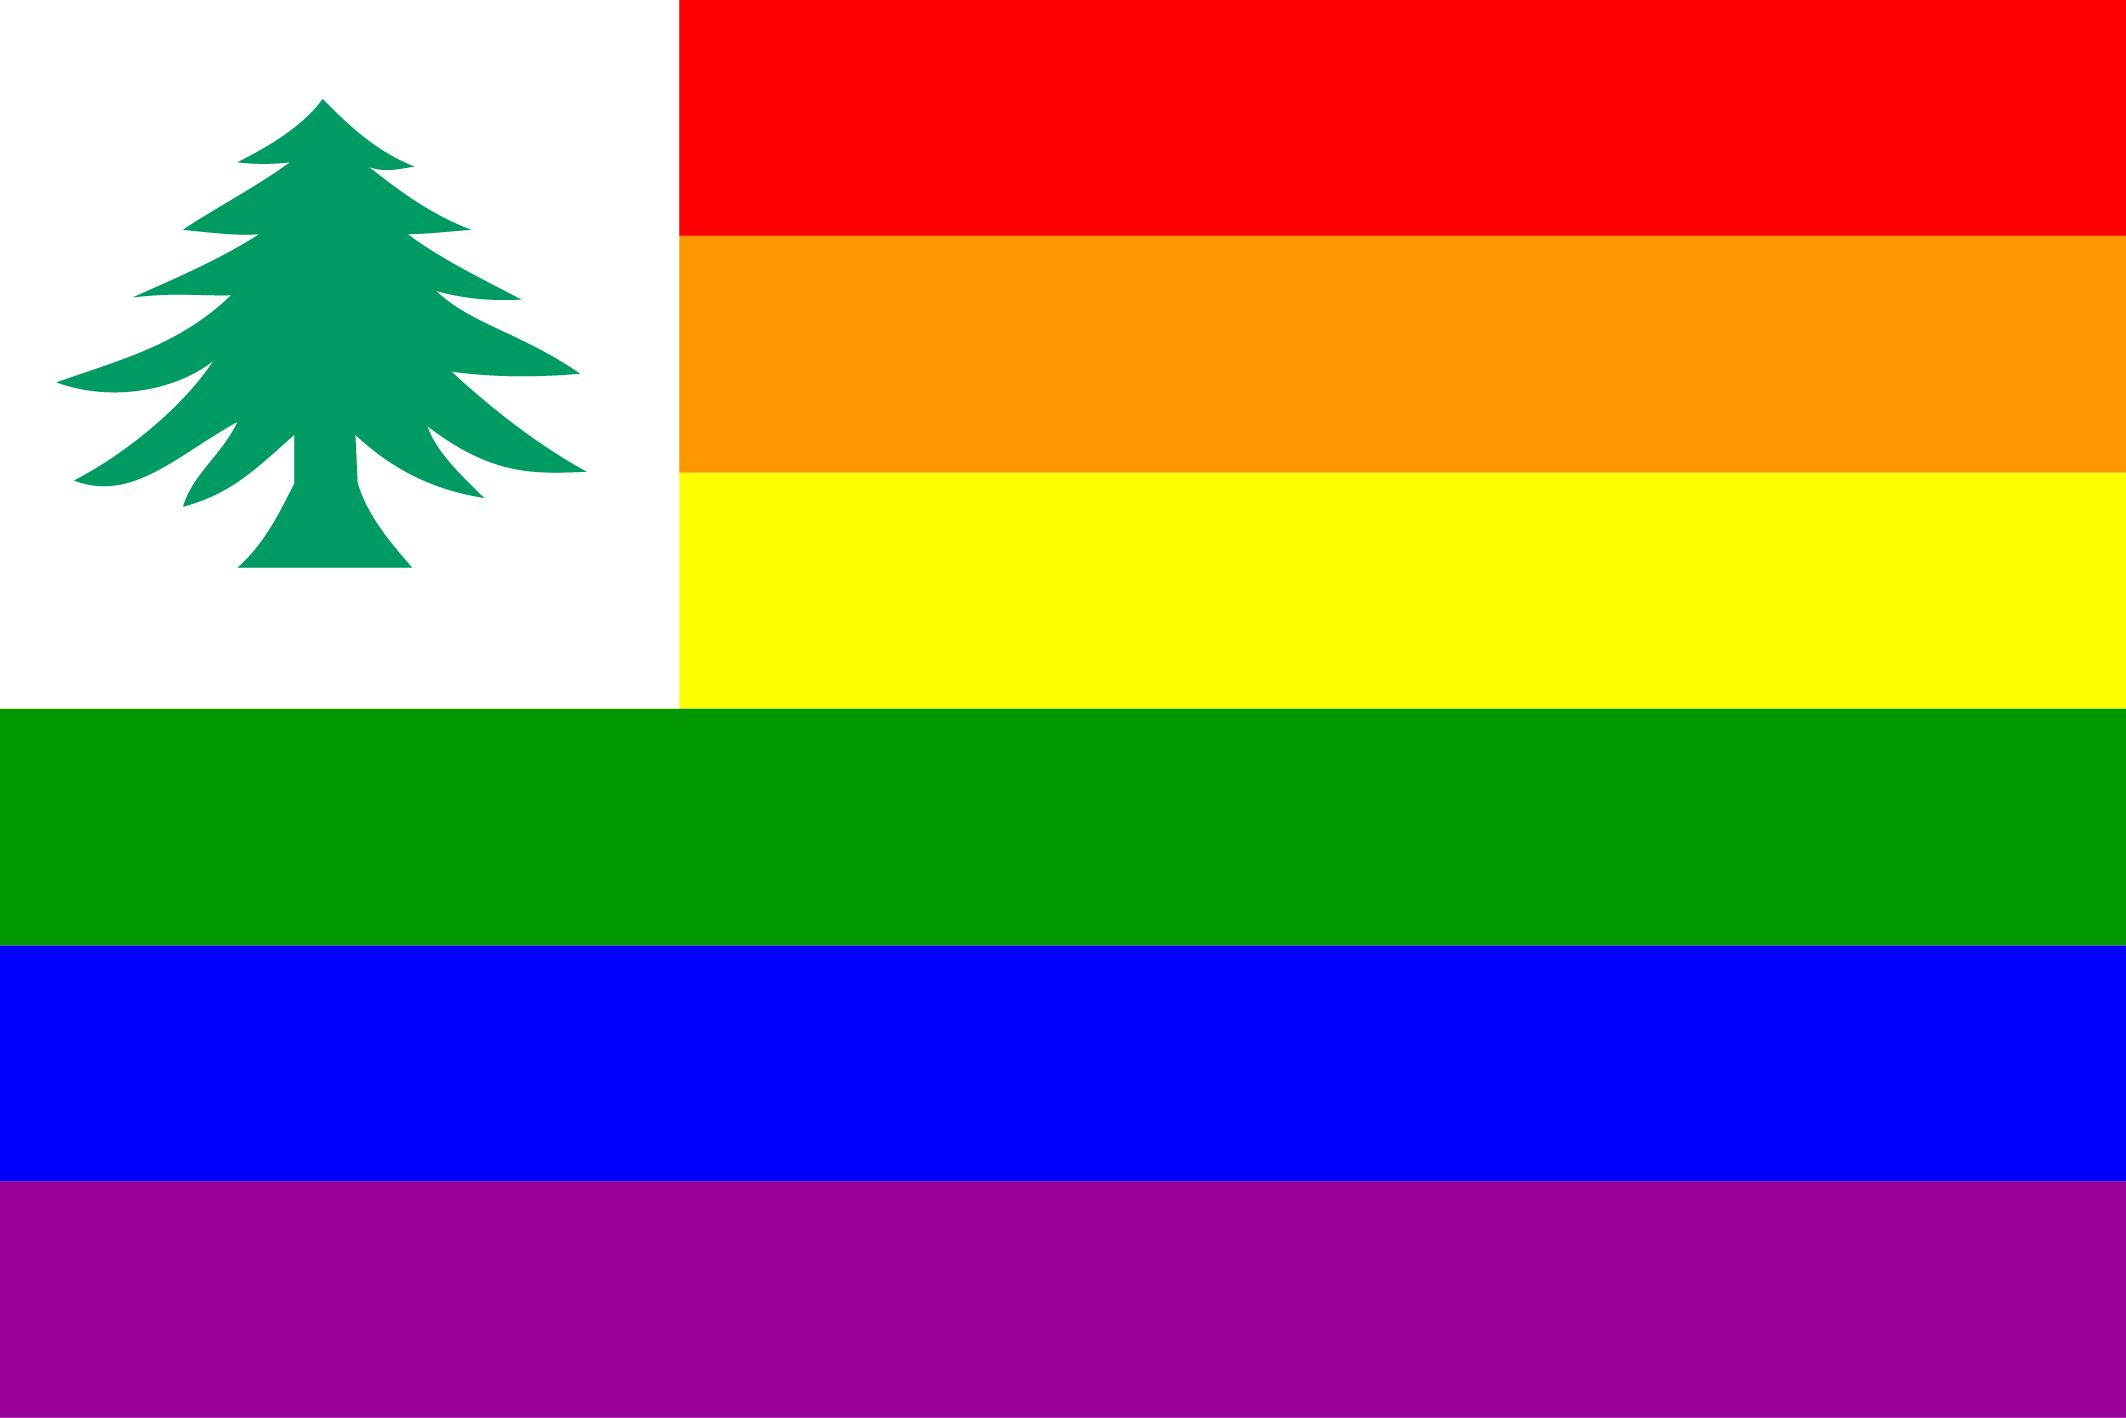 Pride flags. New England флаг. Прайд флаг. ЛГБТ флаг Казахстана. Табако флаг.